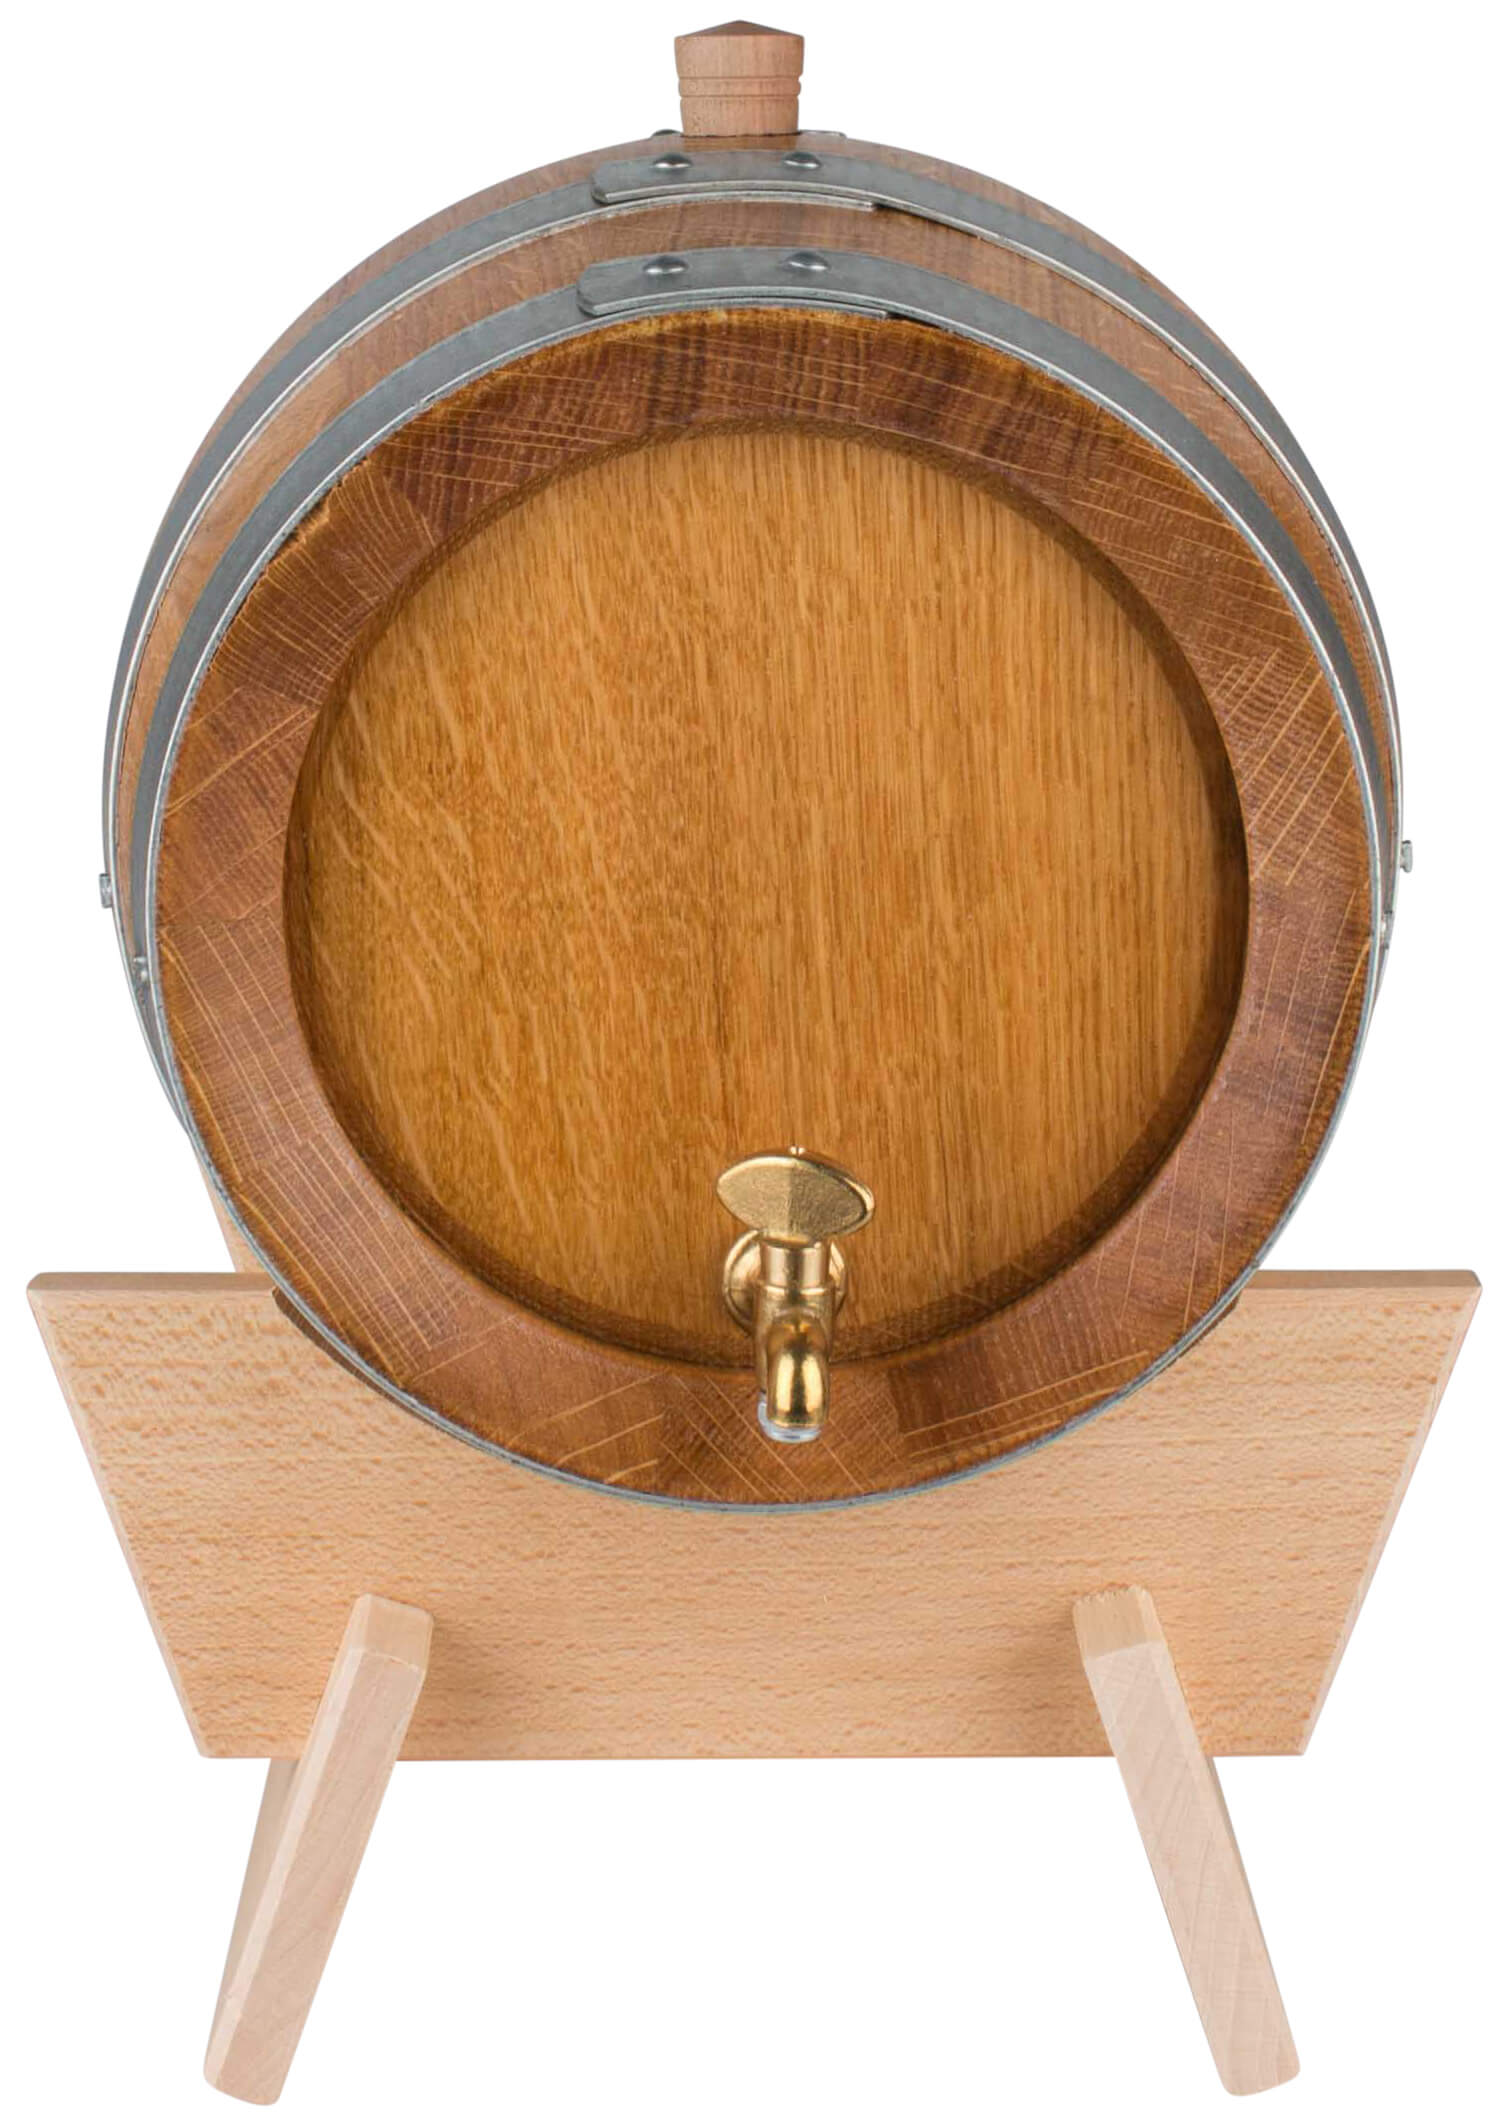 Destillate oak barrel, galvanized collars, brass tap - 5l